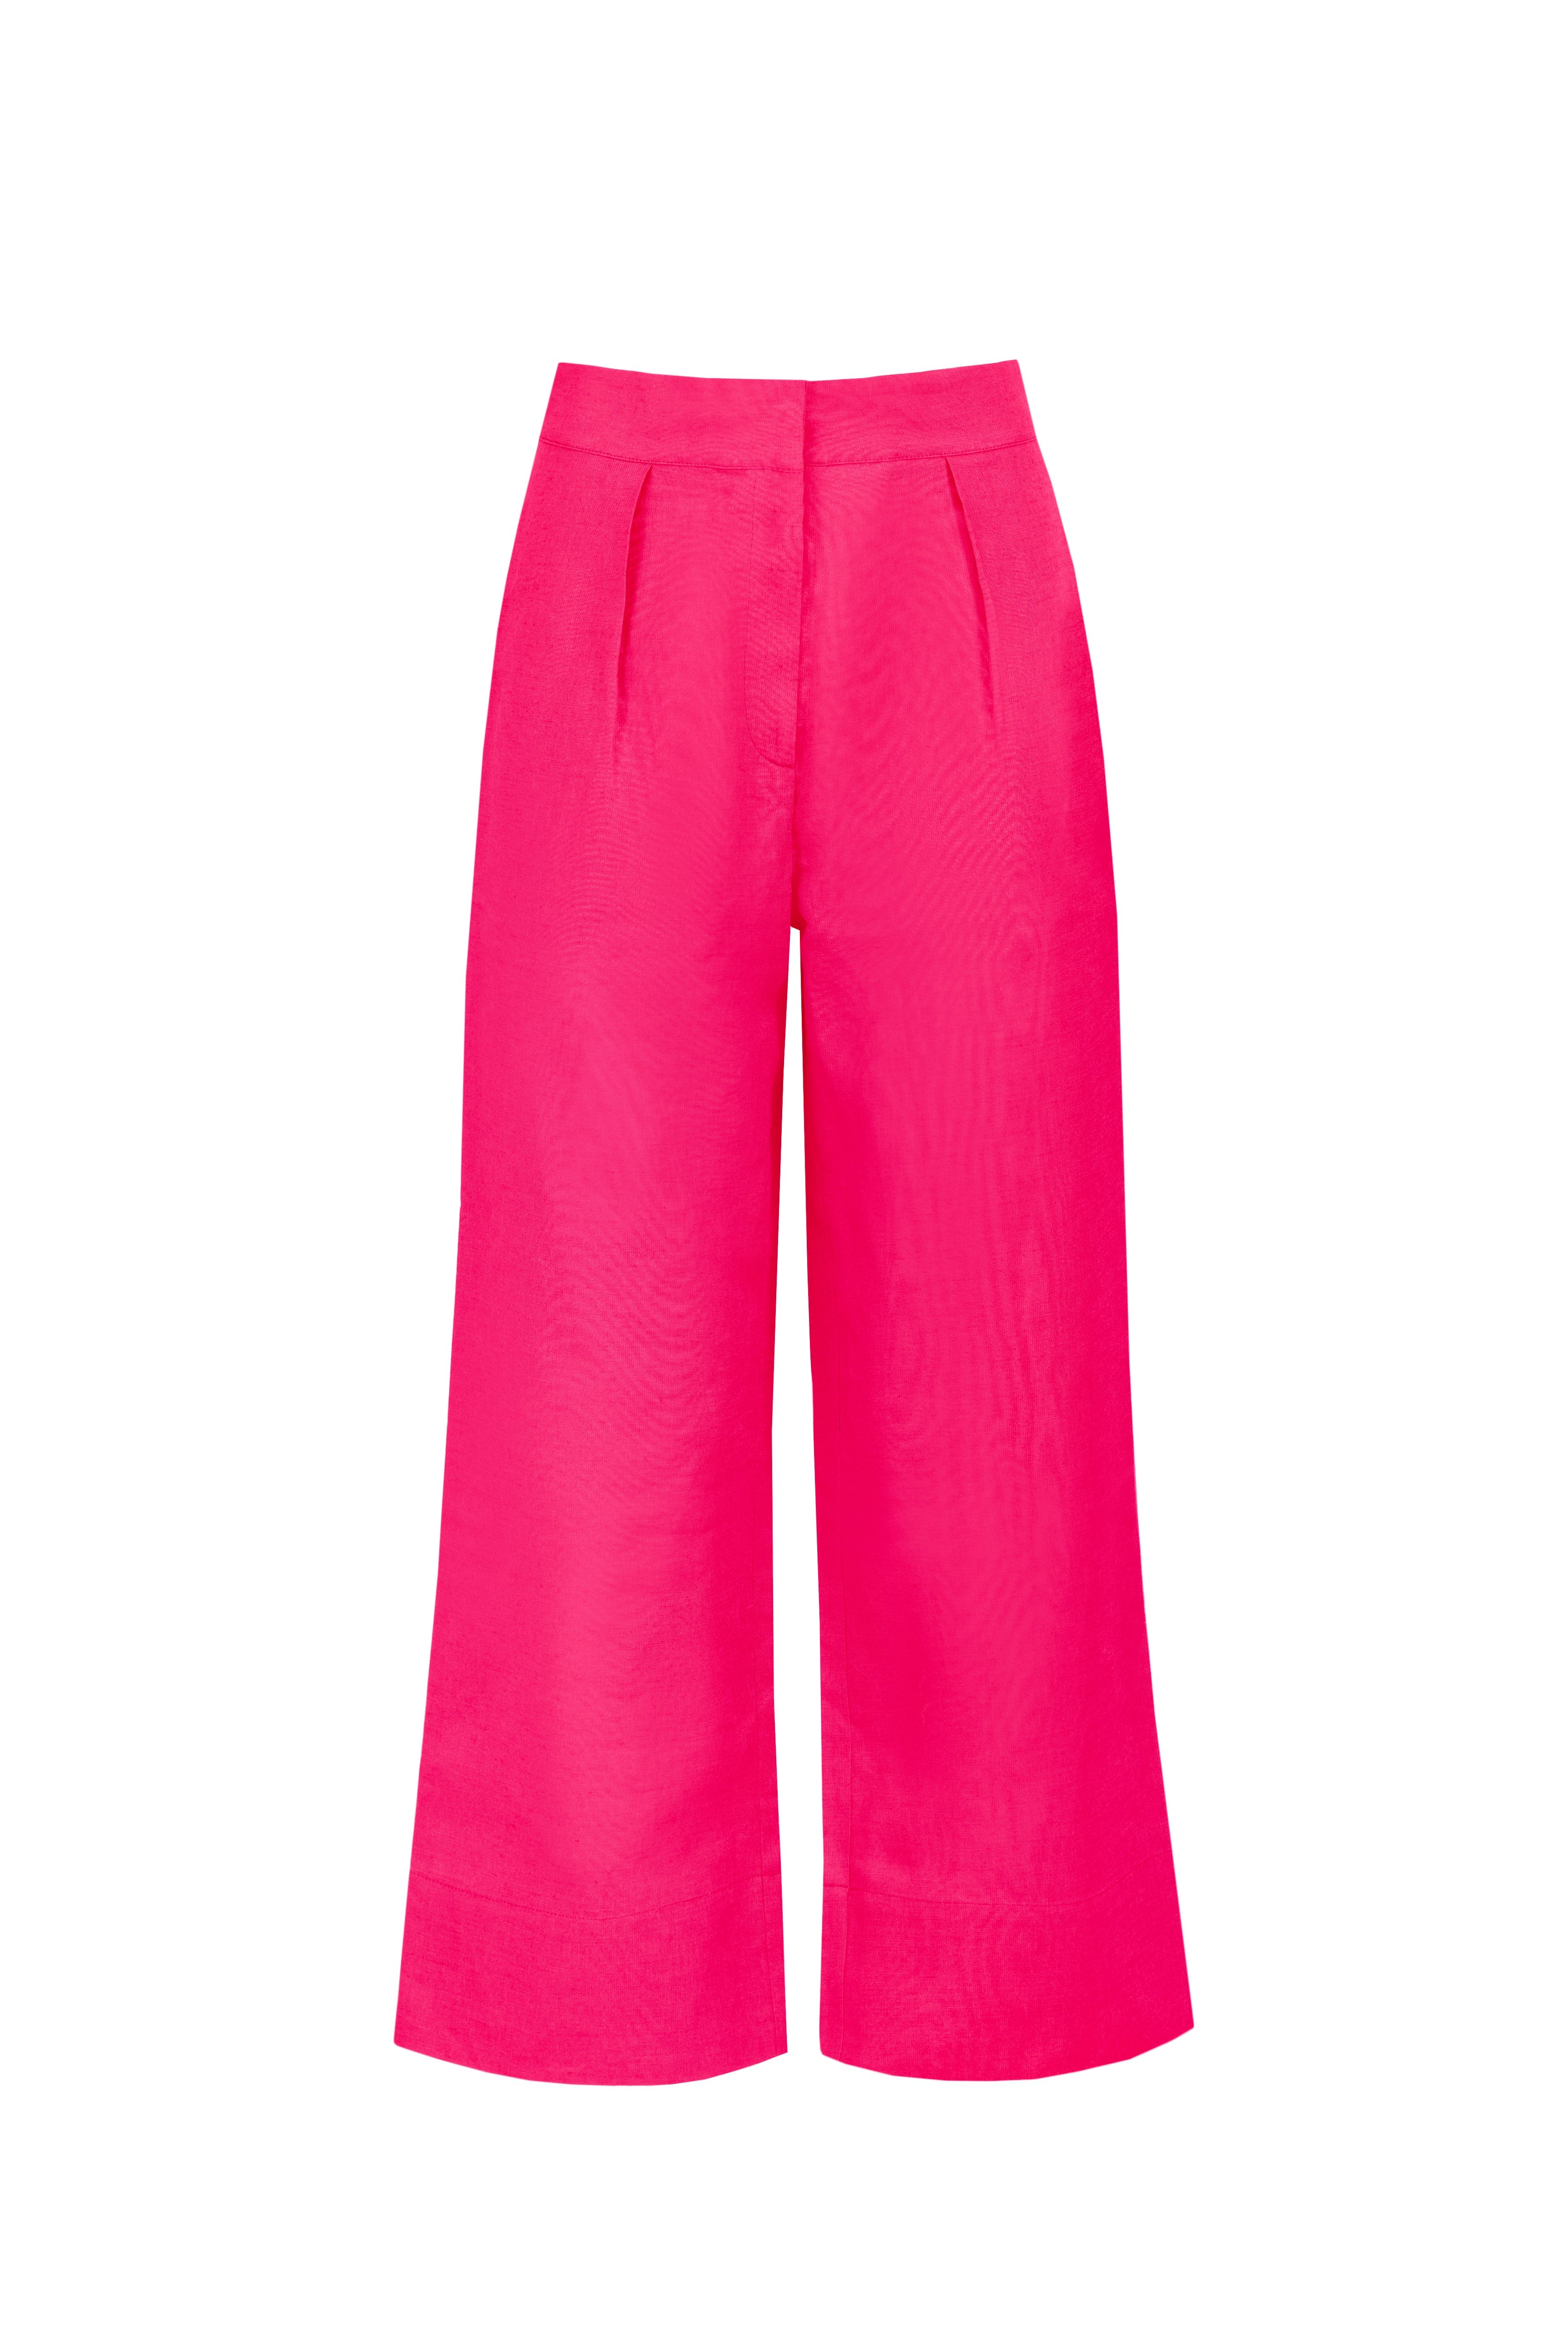 Jaaf Women's Pink / Purple Linen-blend Cropped Pants In Hot Pink